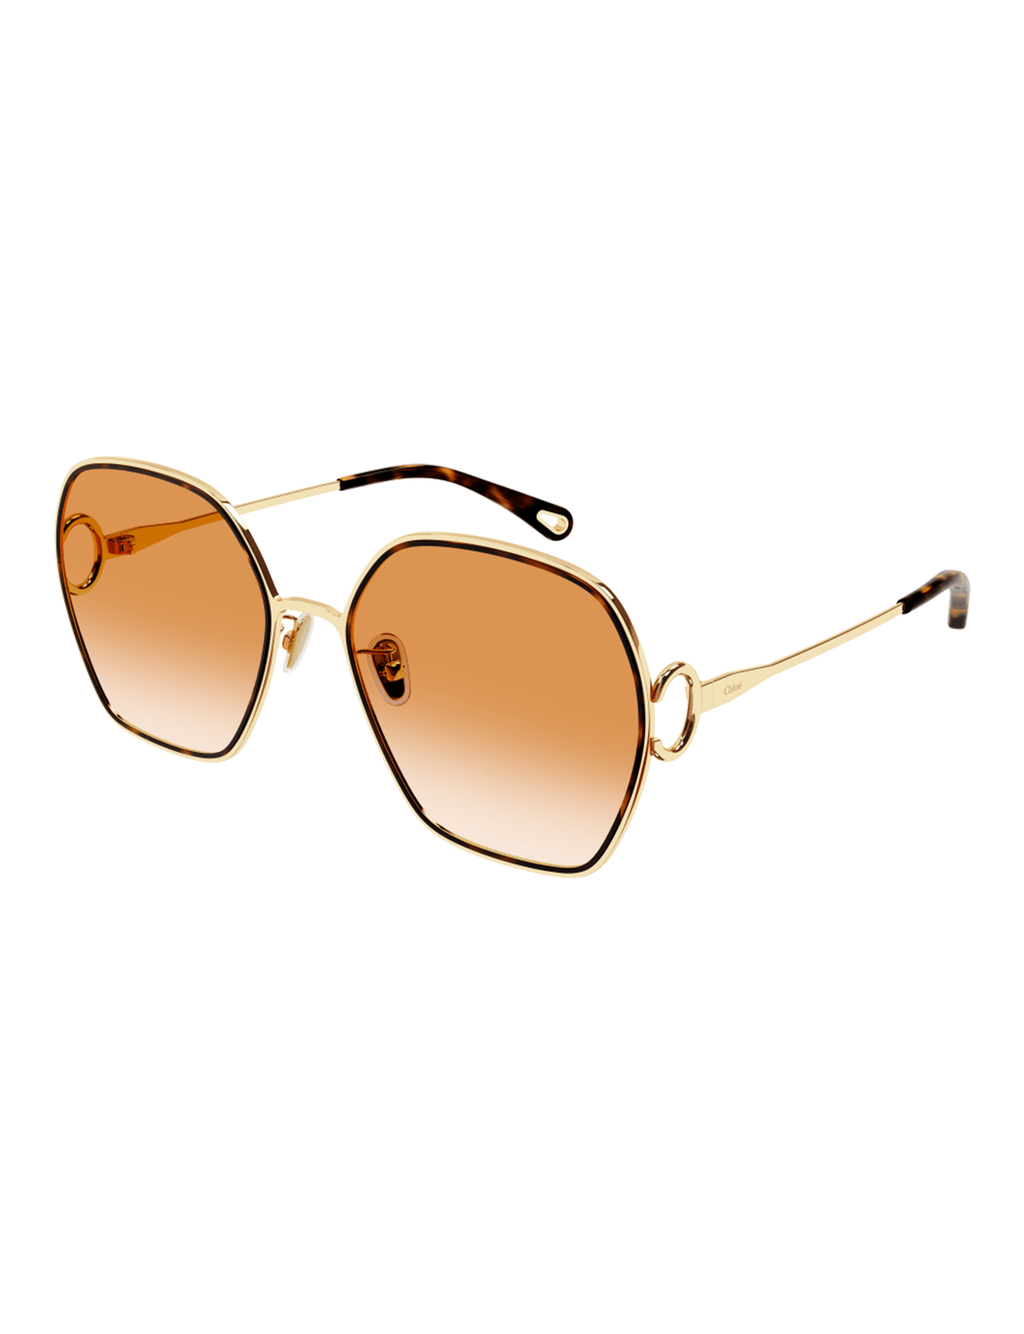 Geometric Sunglasses, Gold/Orange